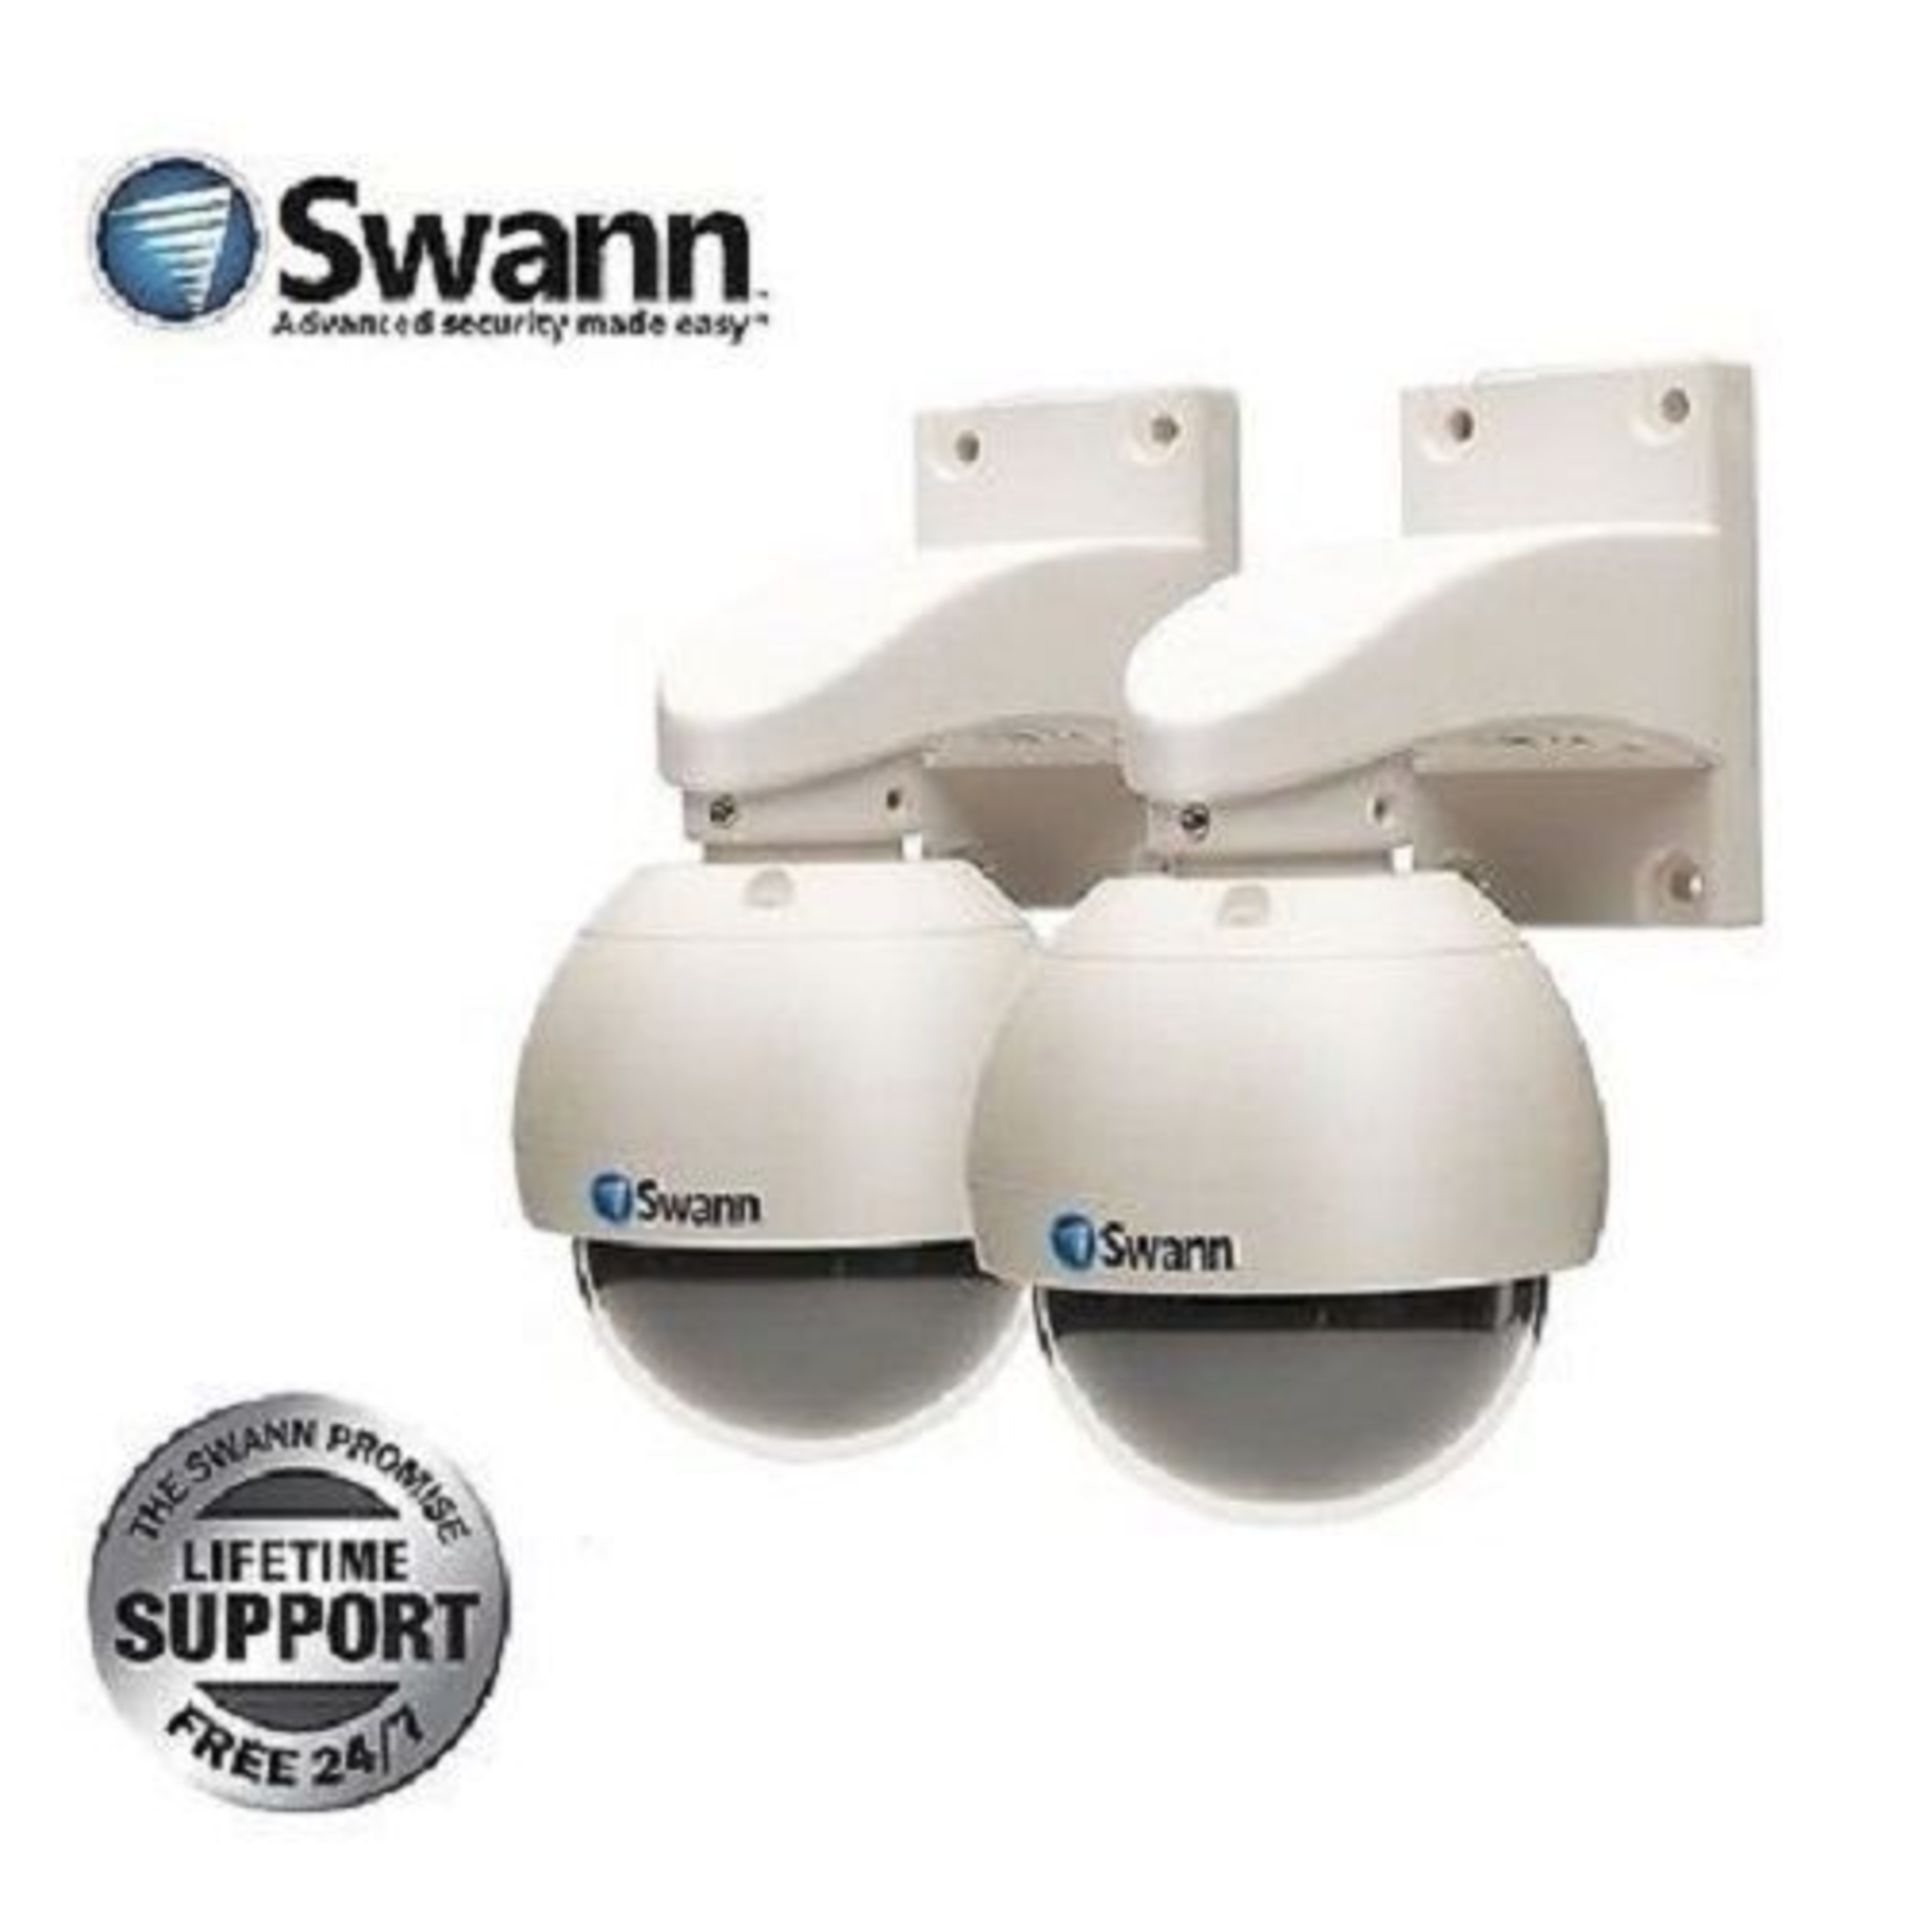 V *TRADE QTY* Brand New Twin Pack Swann PRO-746 PTZ (Pan Tilt Zoom) Dome Camera - 700TVL - Anti